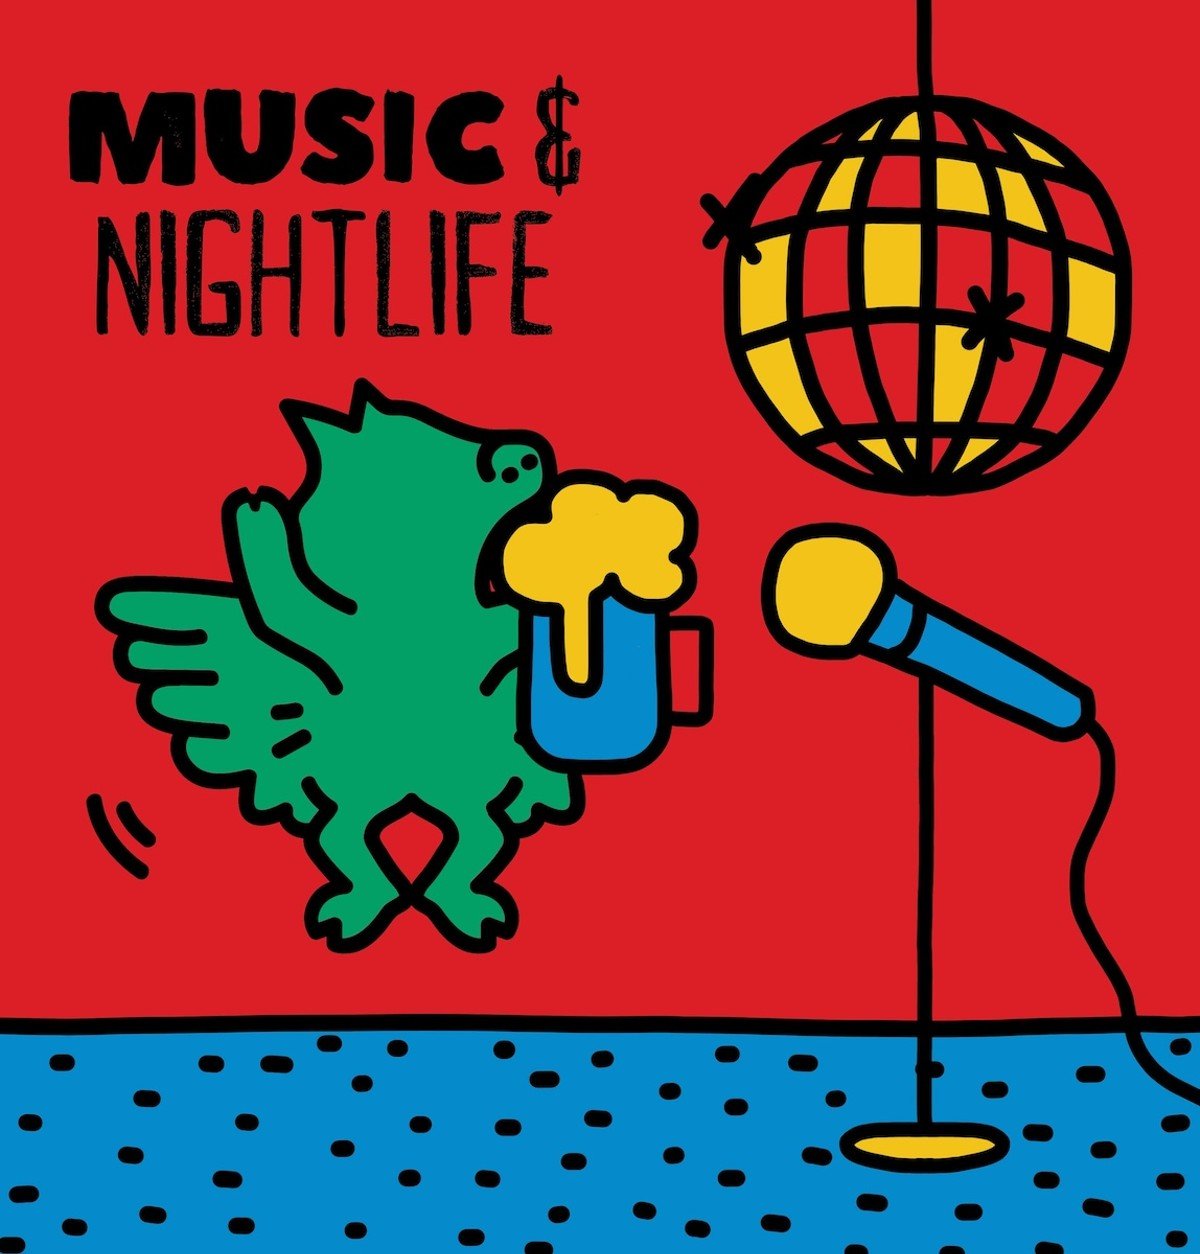 Music & Nightlife